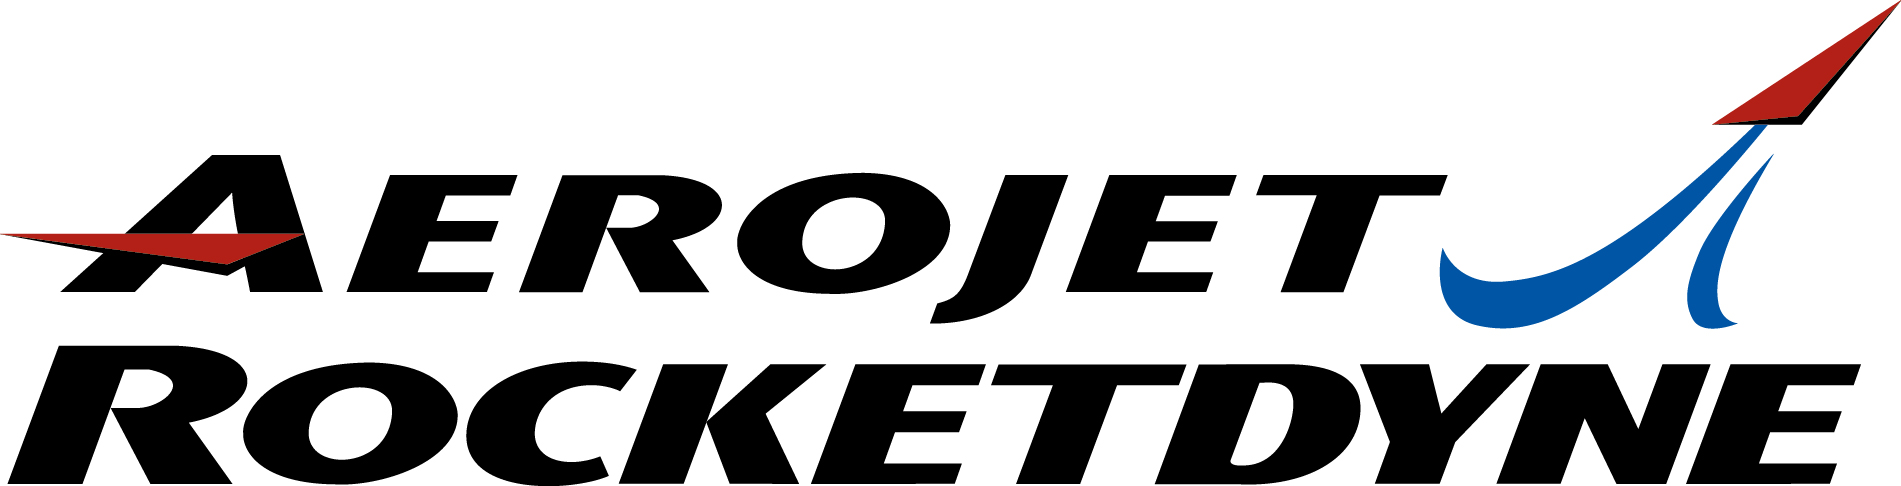 aerojet rocketdyne logo